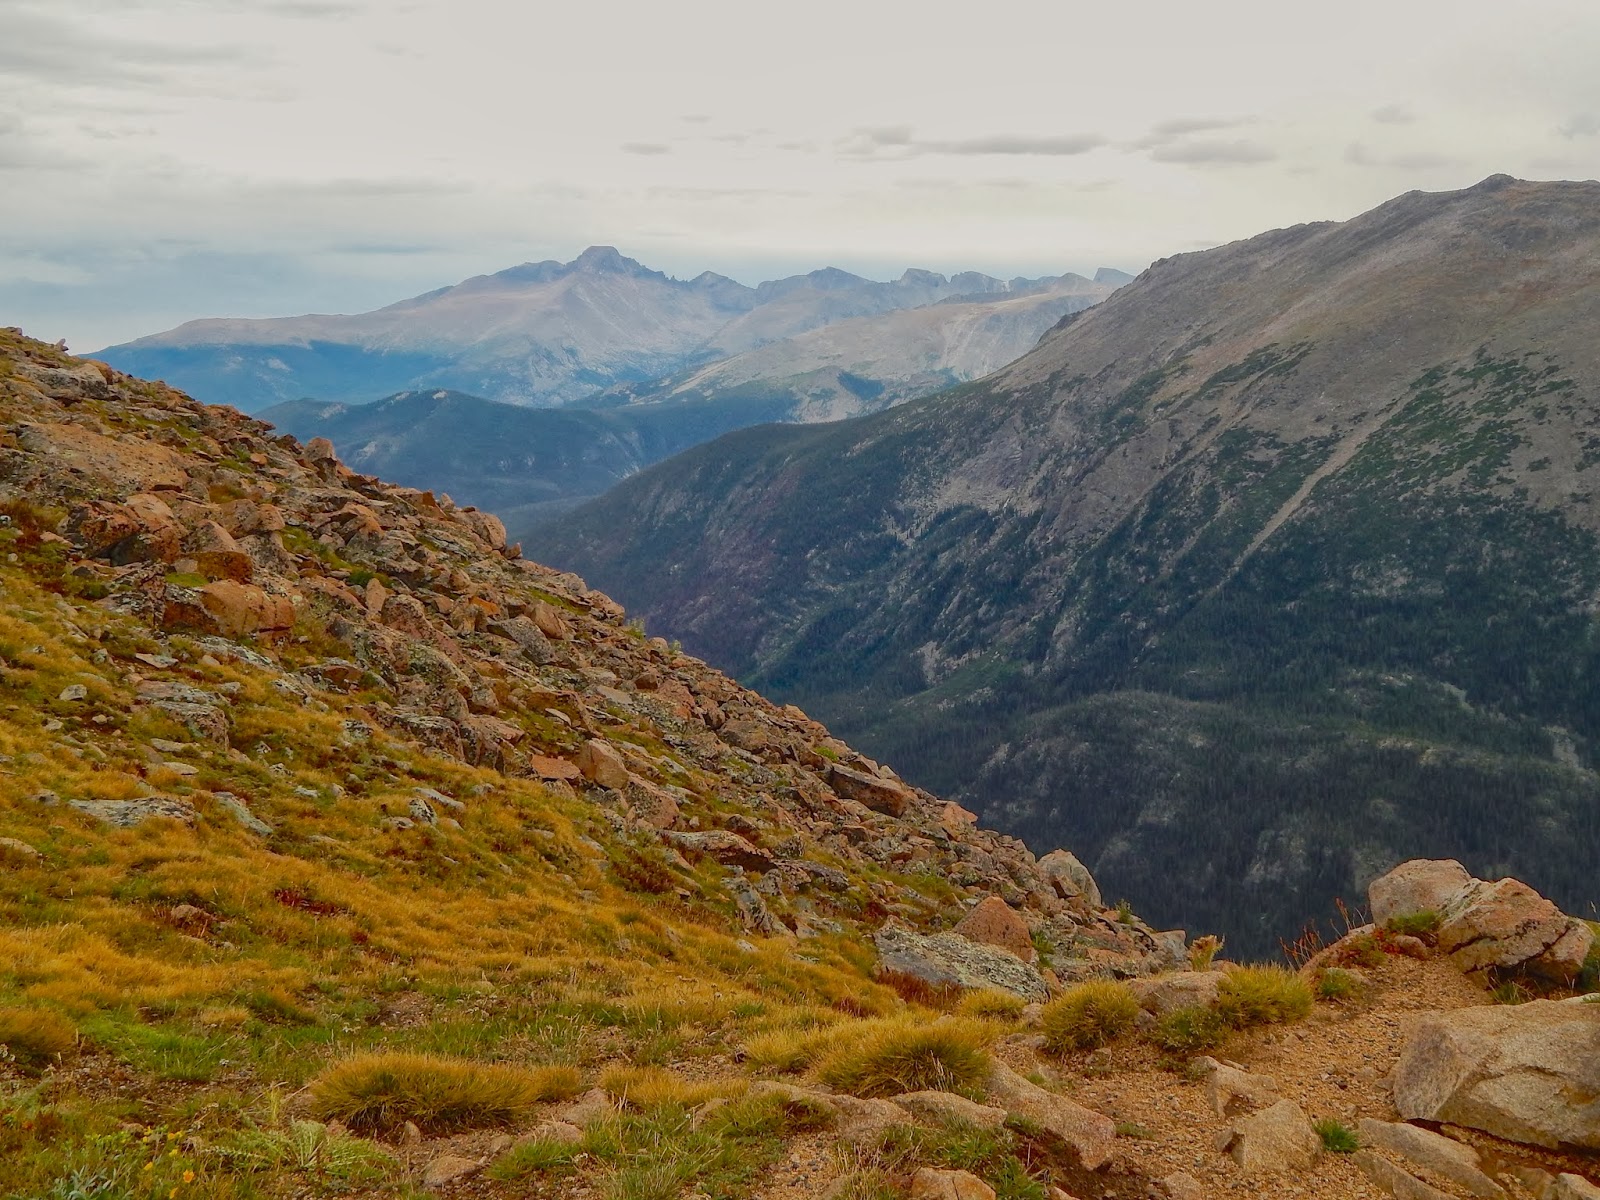 Impression Evergreen: The Alpine Tundra - Paradise Restored